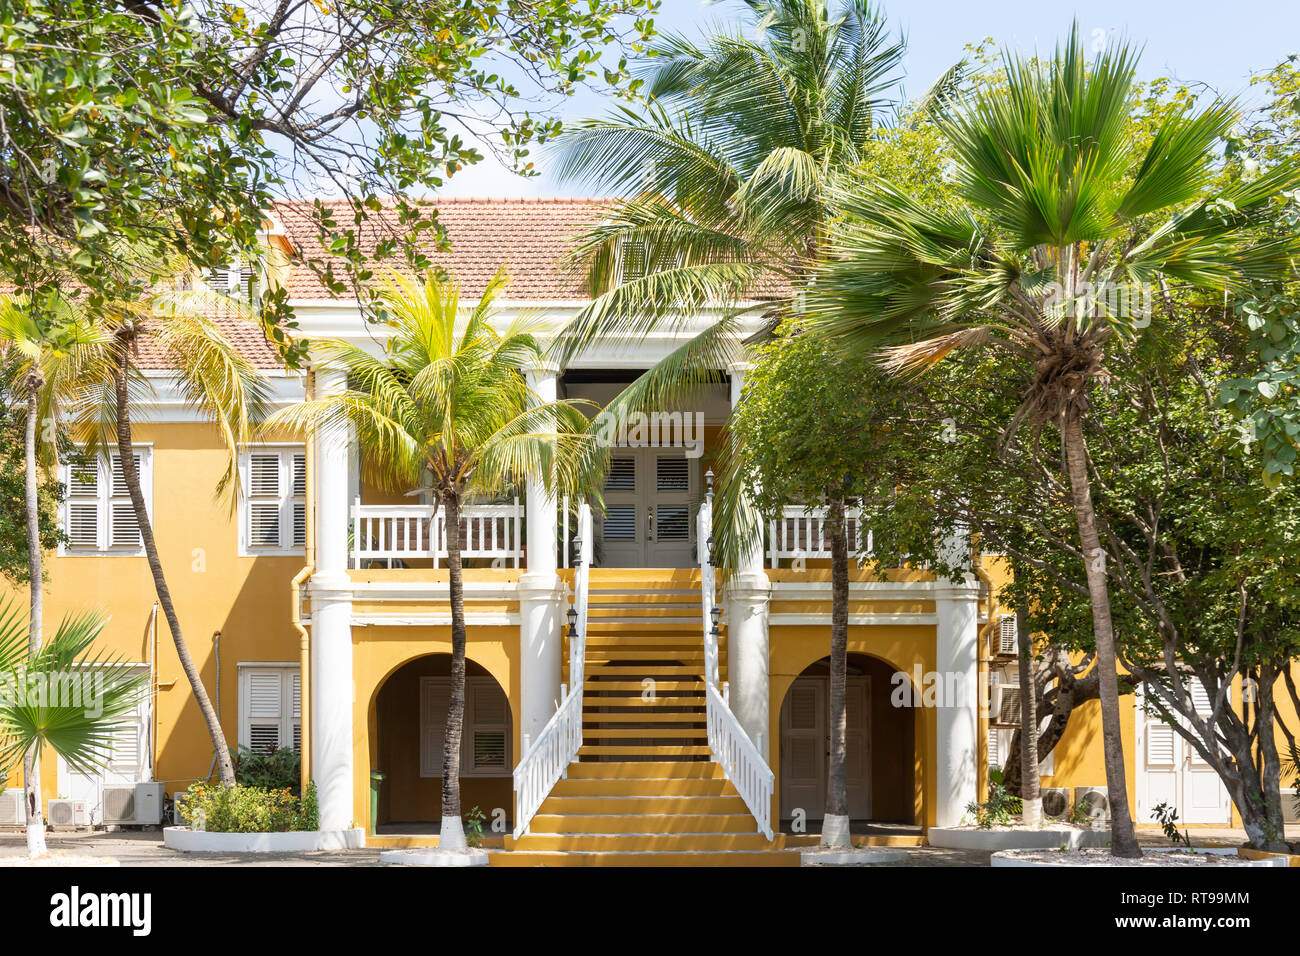 Lo storico edificio Bestuurkantoor (uffici governativi), Plaza Wilhelmina, Kralendijk, Bonaire, ABC isole Antille sottovento, dei Caraibi Foto Stock